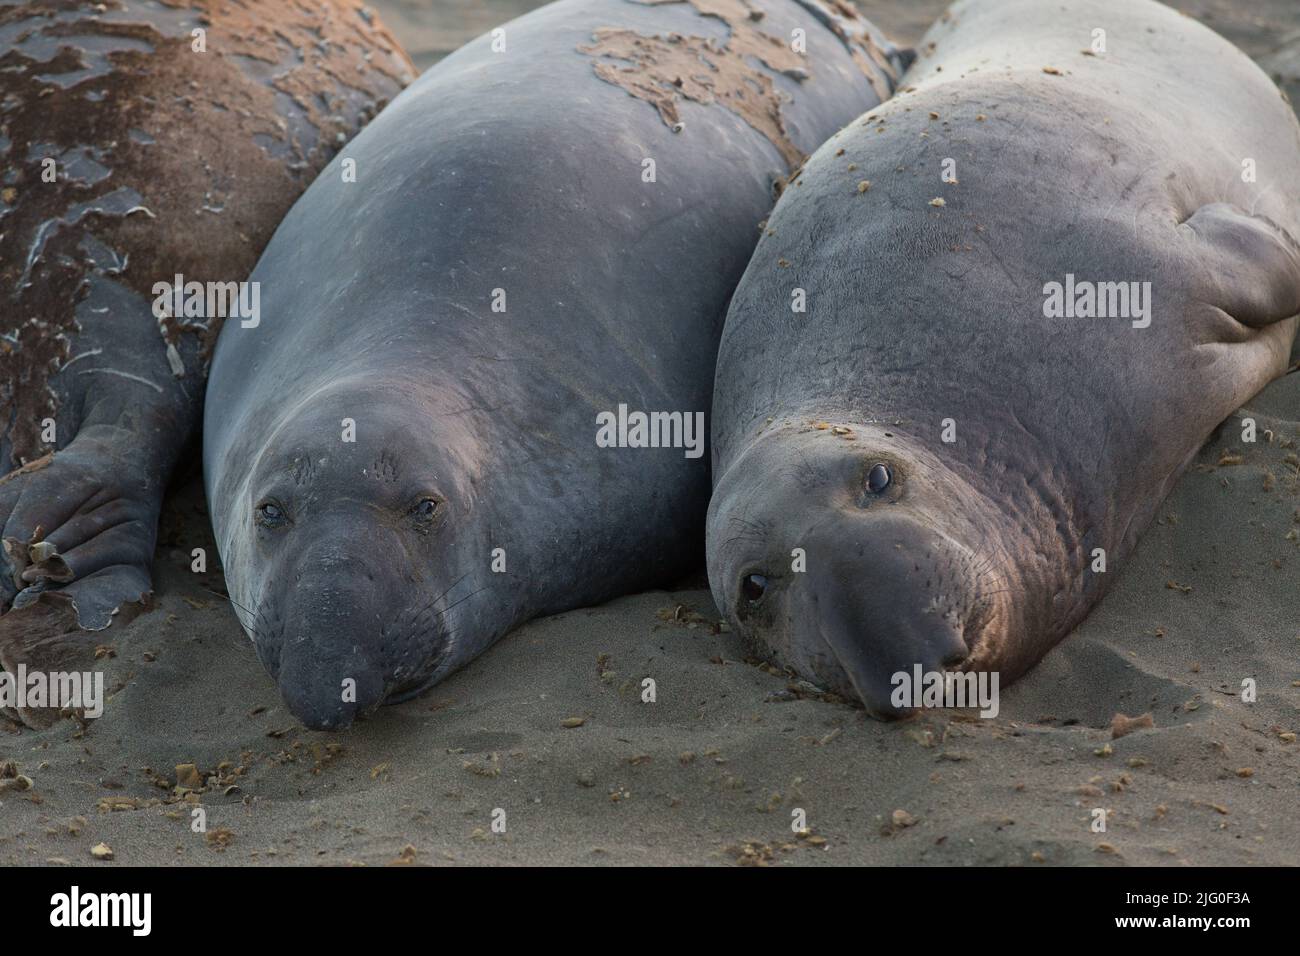 A closeup of elephant seals on the sand Stock Photo